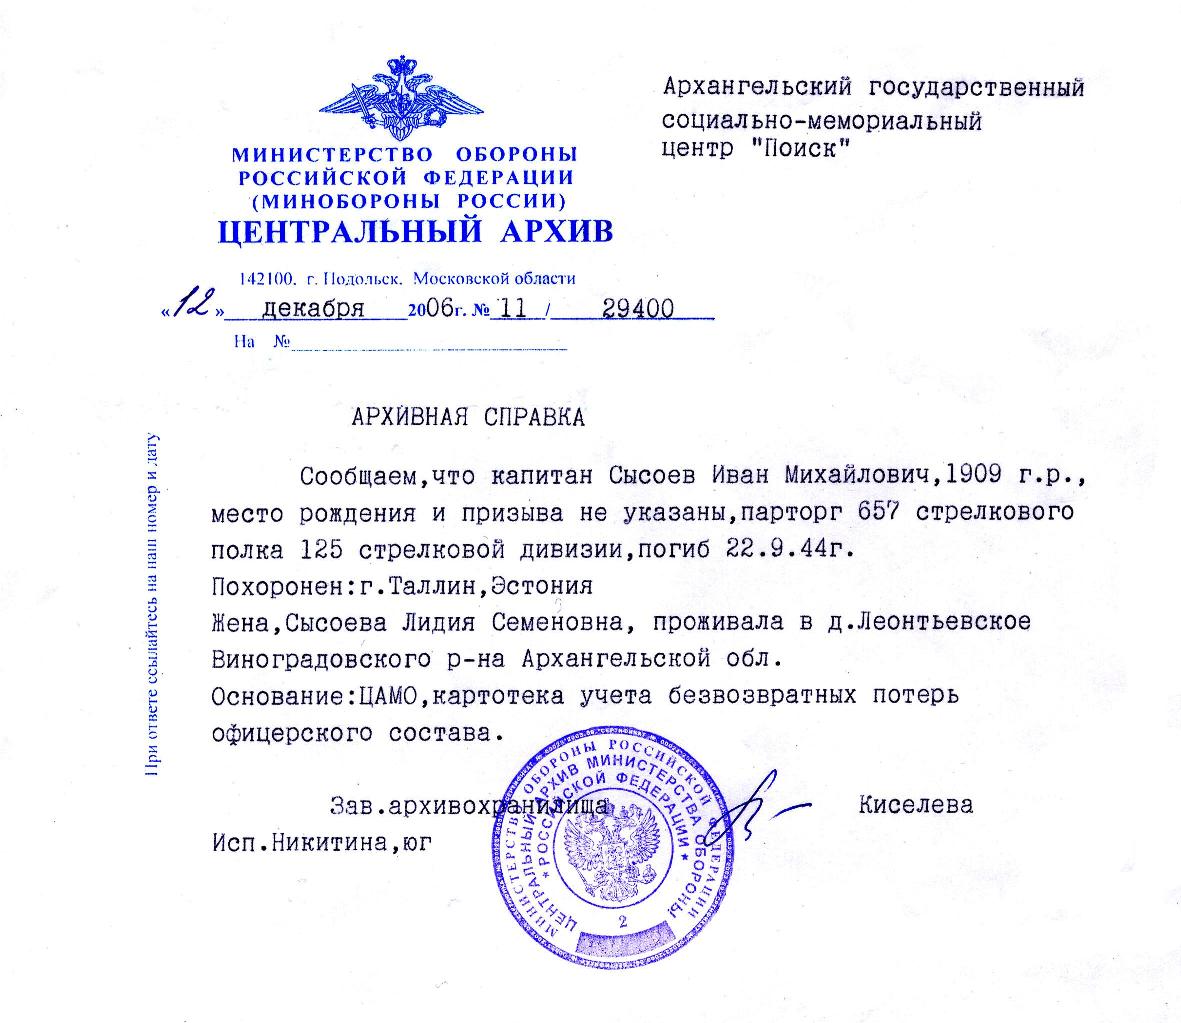 Справка о судьбе И.М.Сысоева из ЦАМО РФ